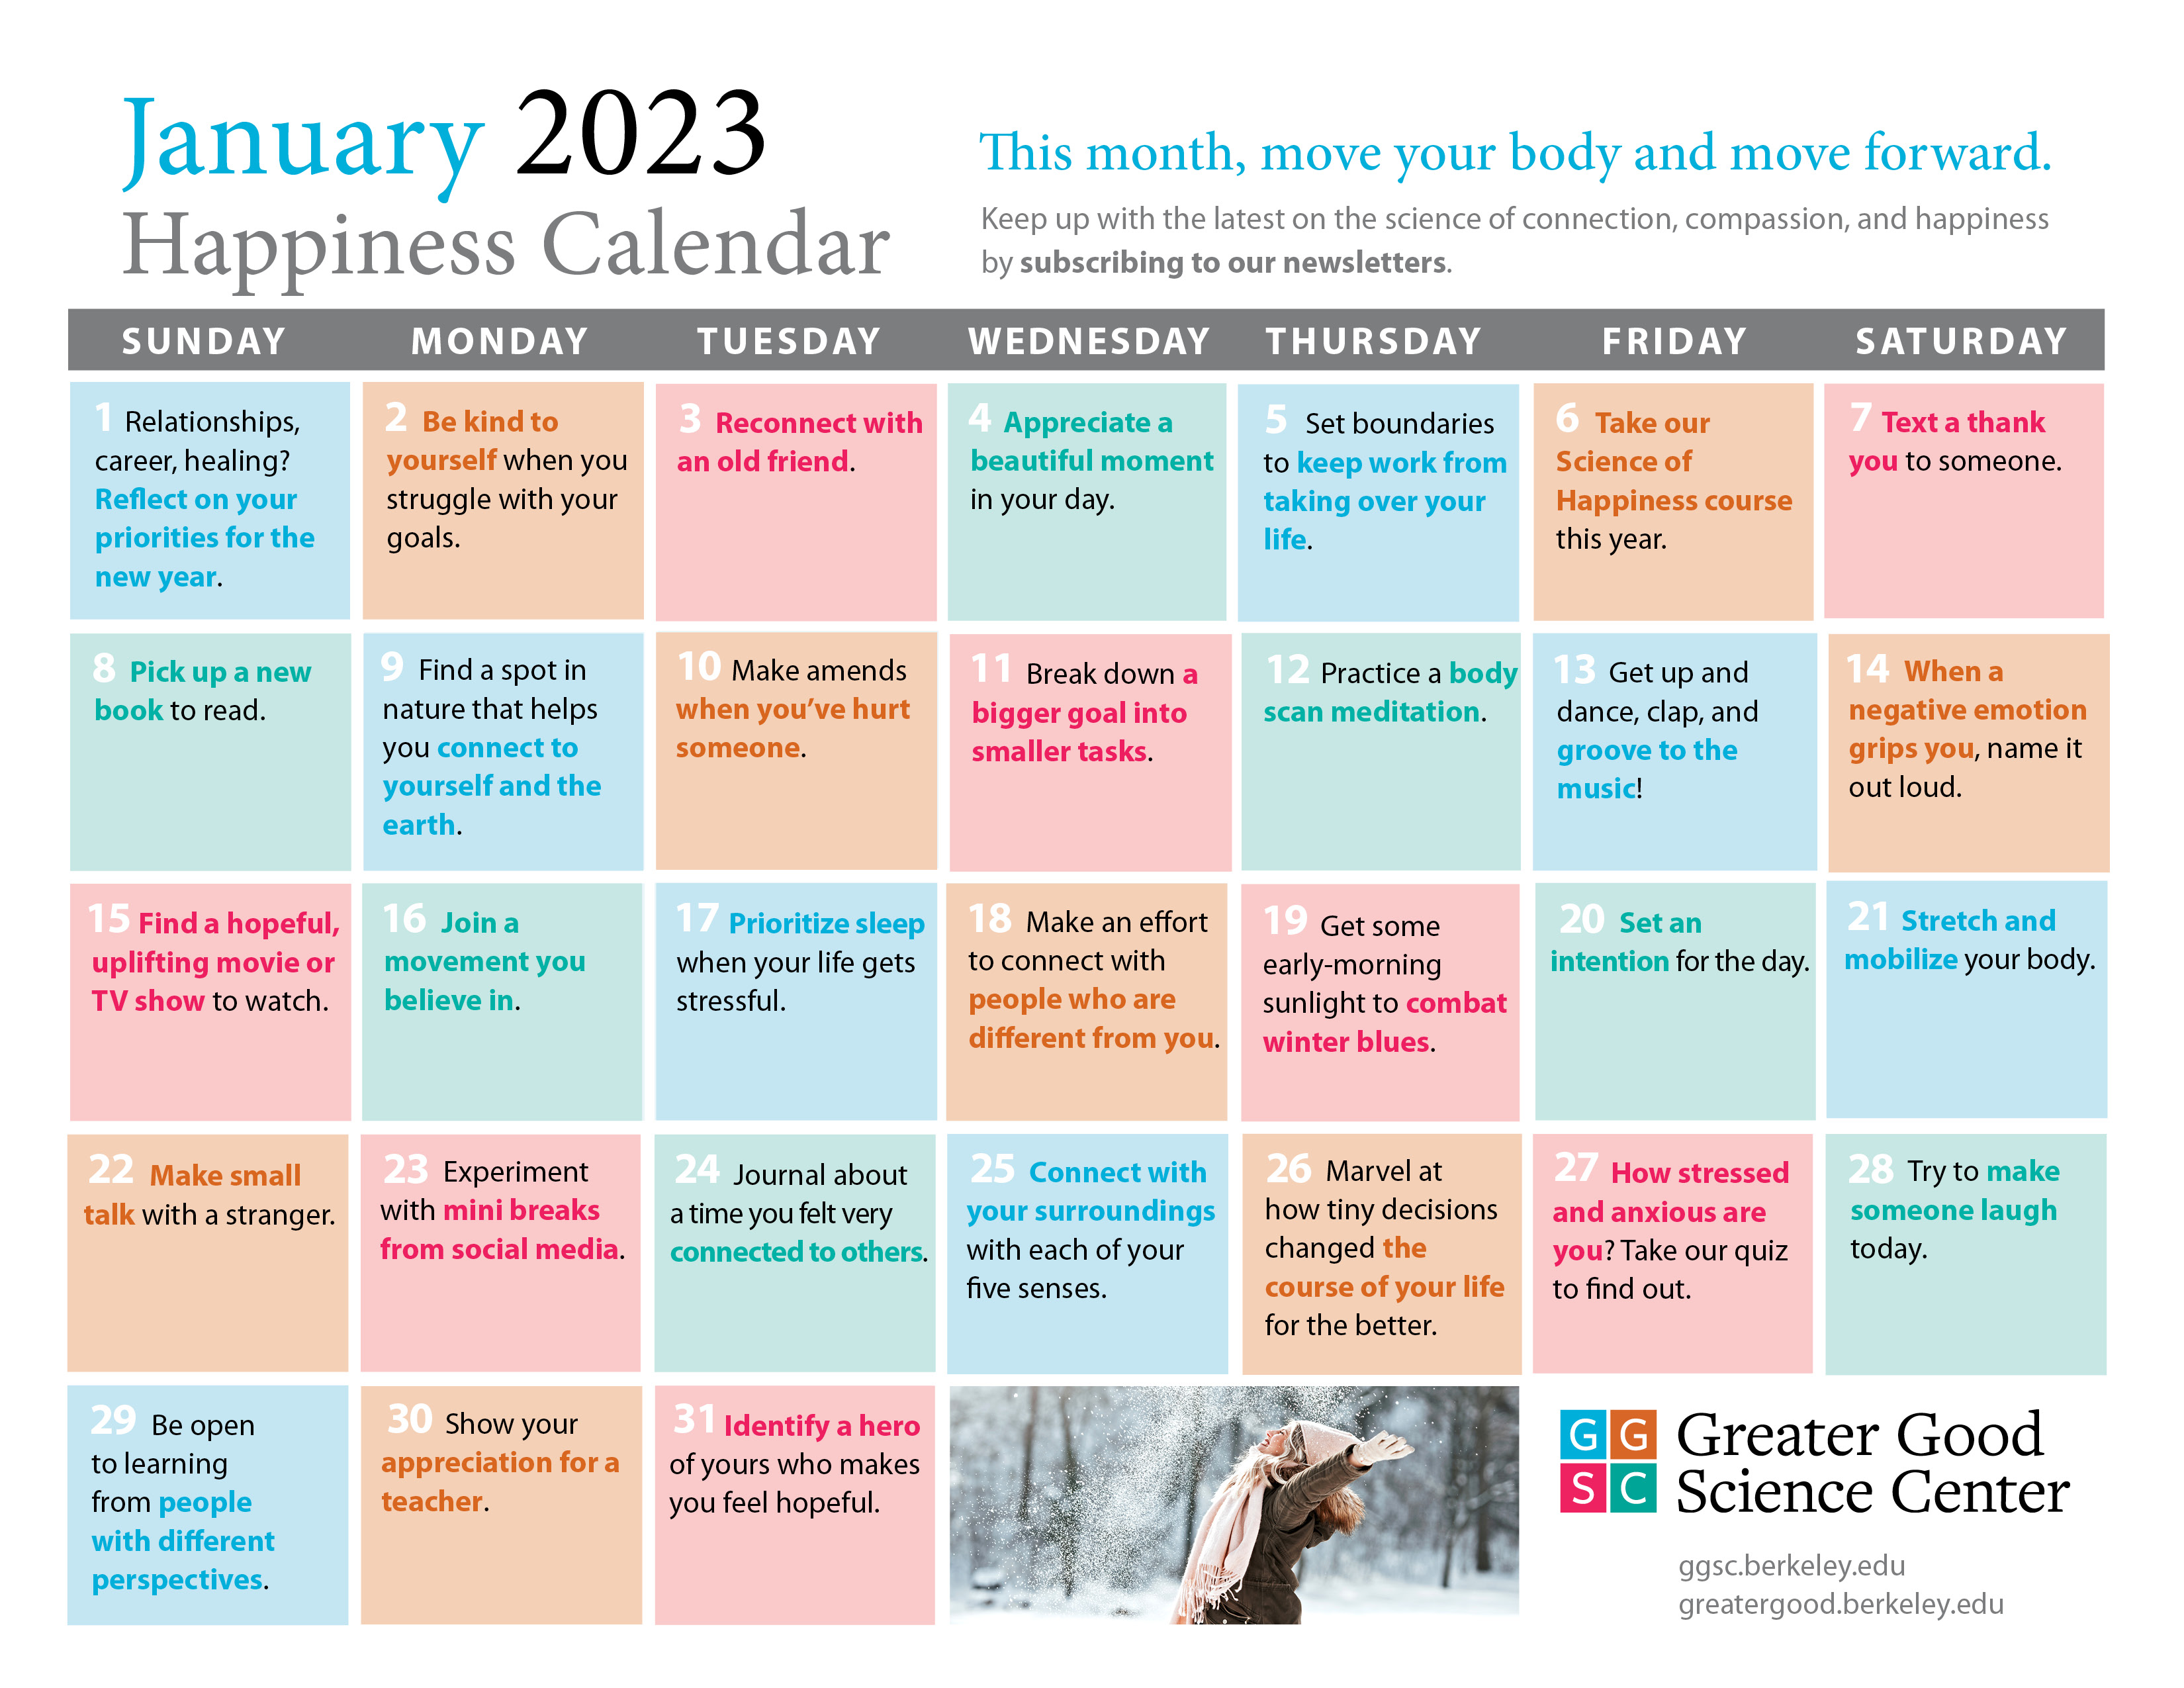 January 2023 happiness calendar